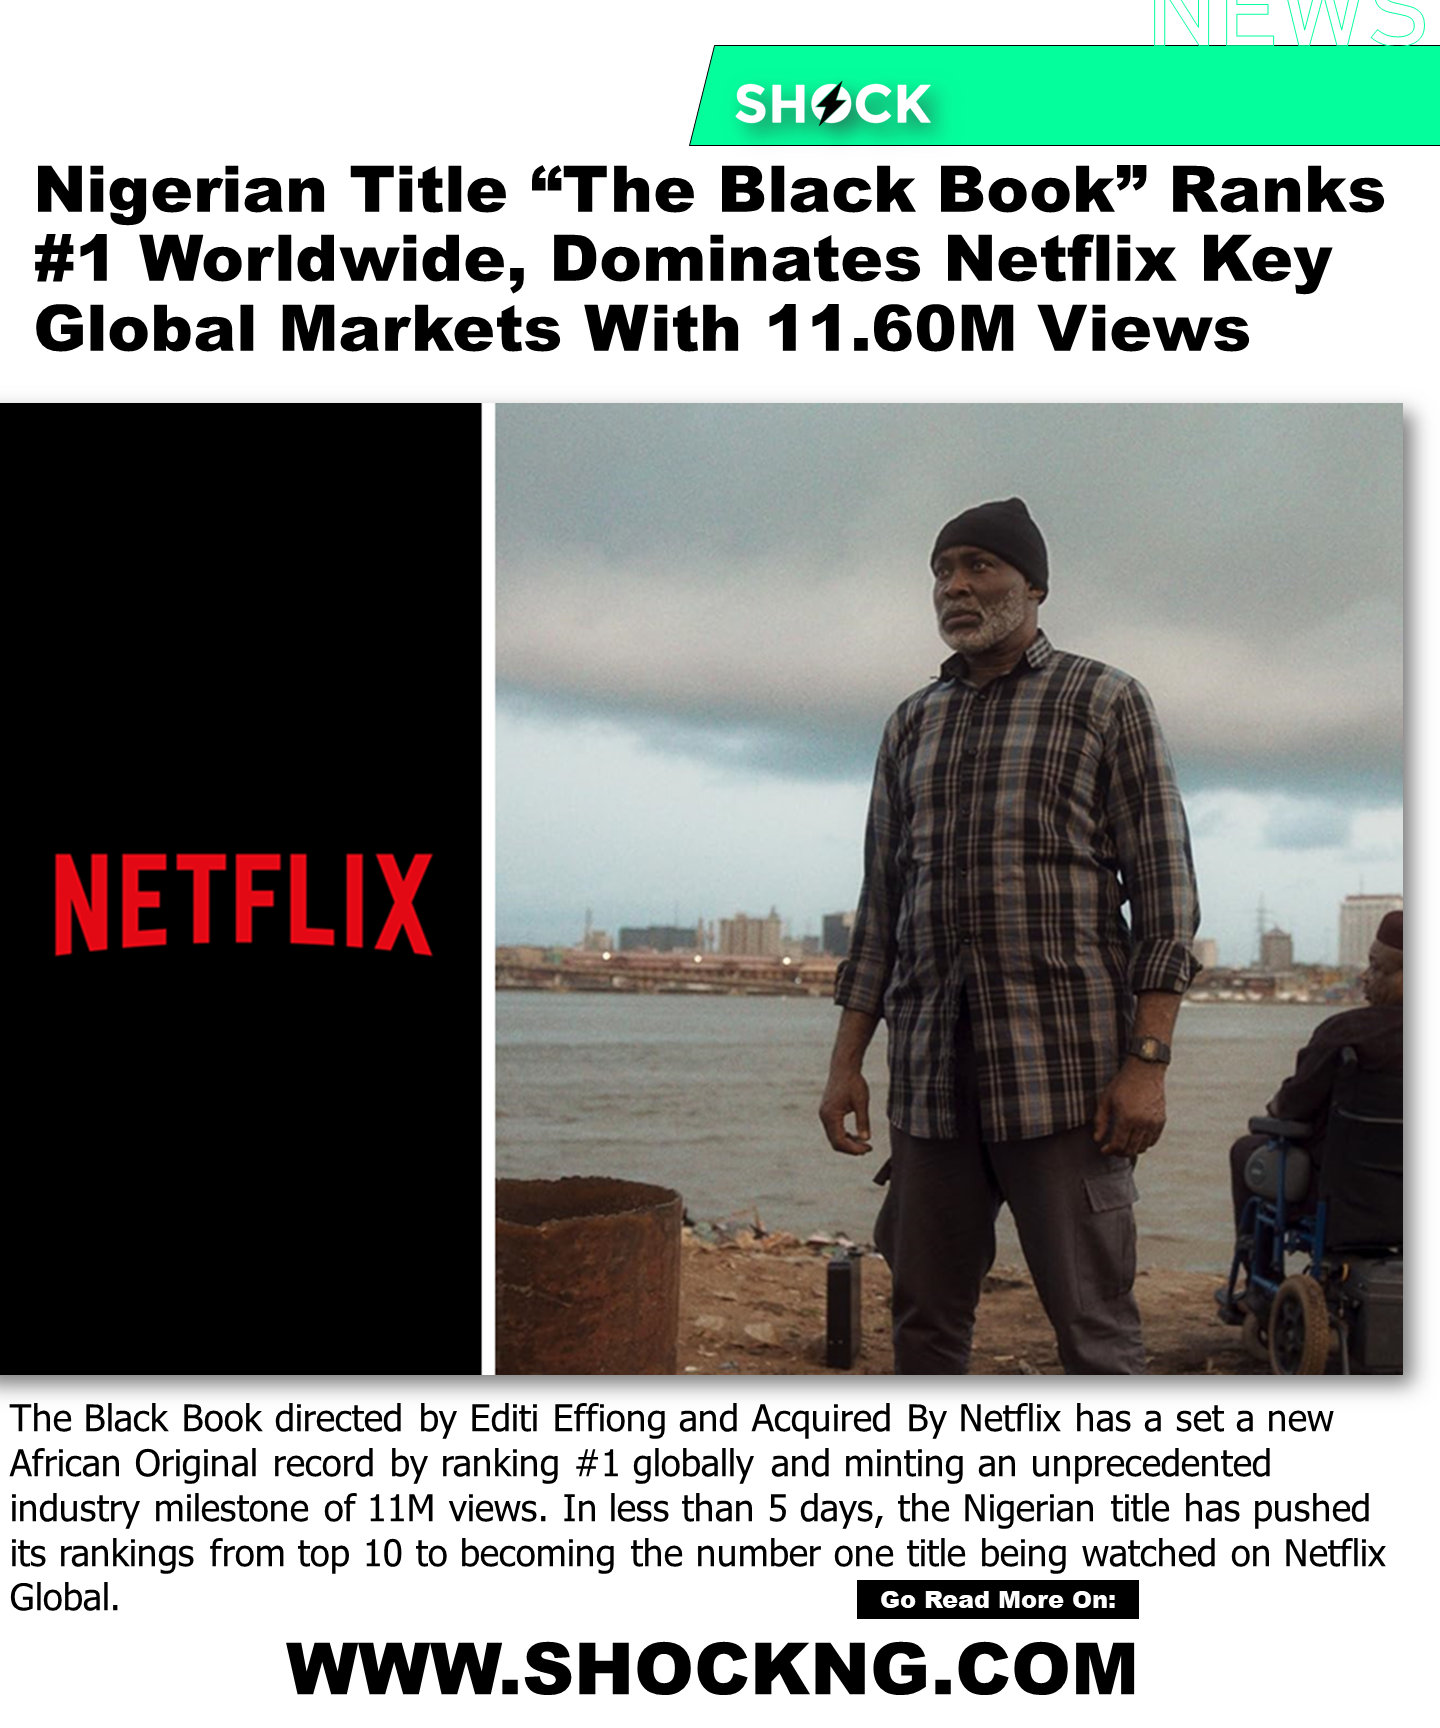 Netflix Black book Nollywood data - Nigerian Title “The Black Book” Ranks #1 Worldwide, Dominates Netflix Key Global Markets With 11.60M Views